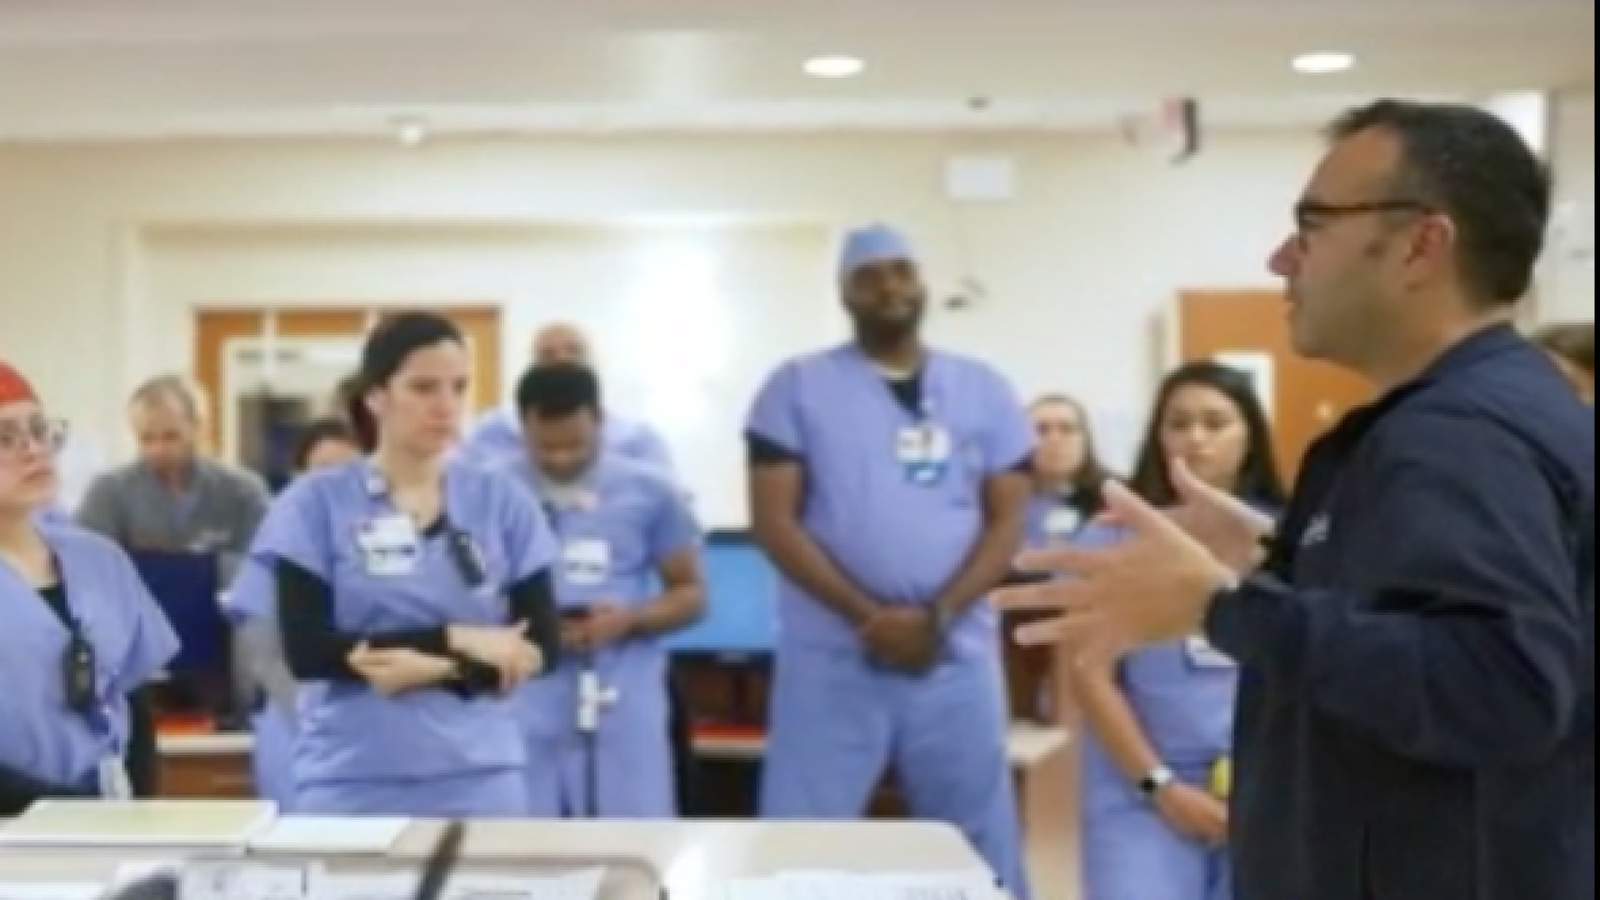 Houston Methodist nurses becoming surrogate families for COVID-19 patients